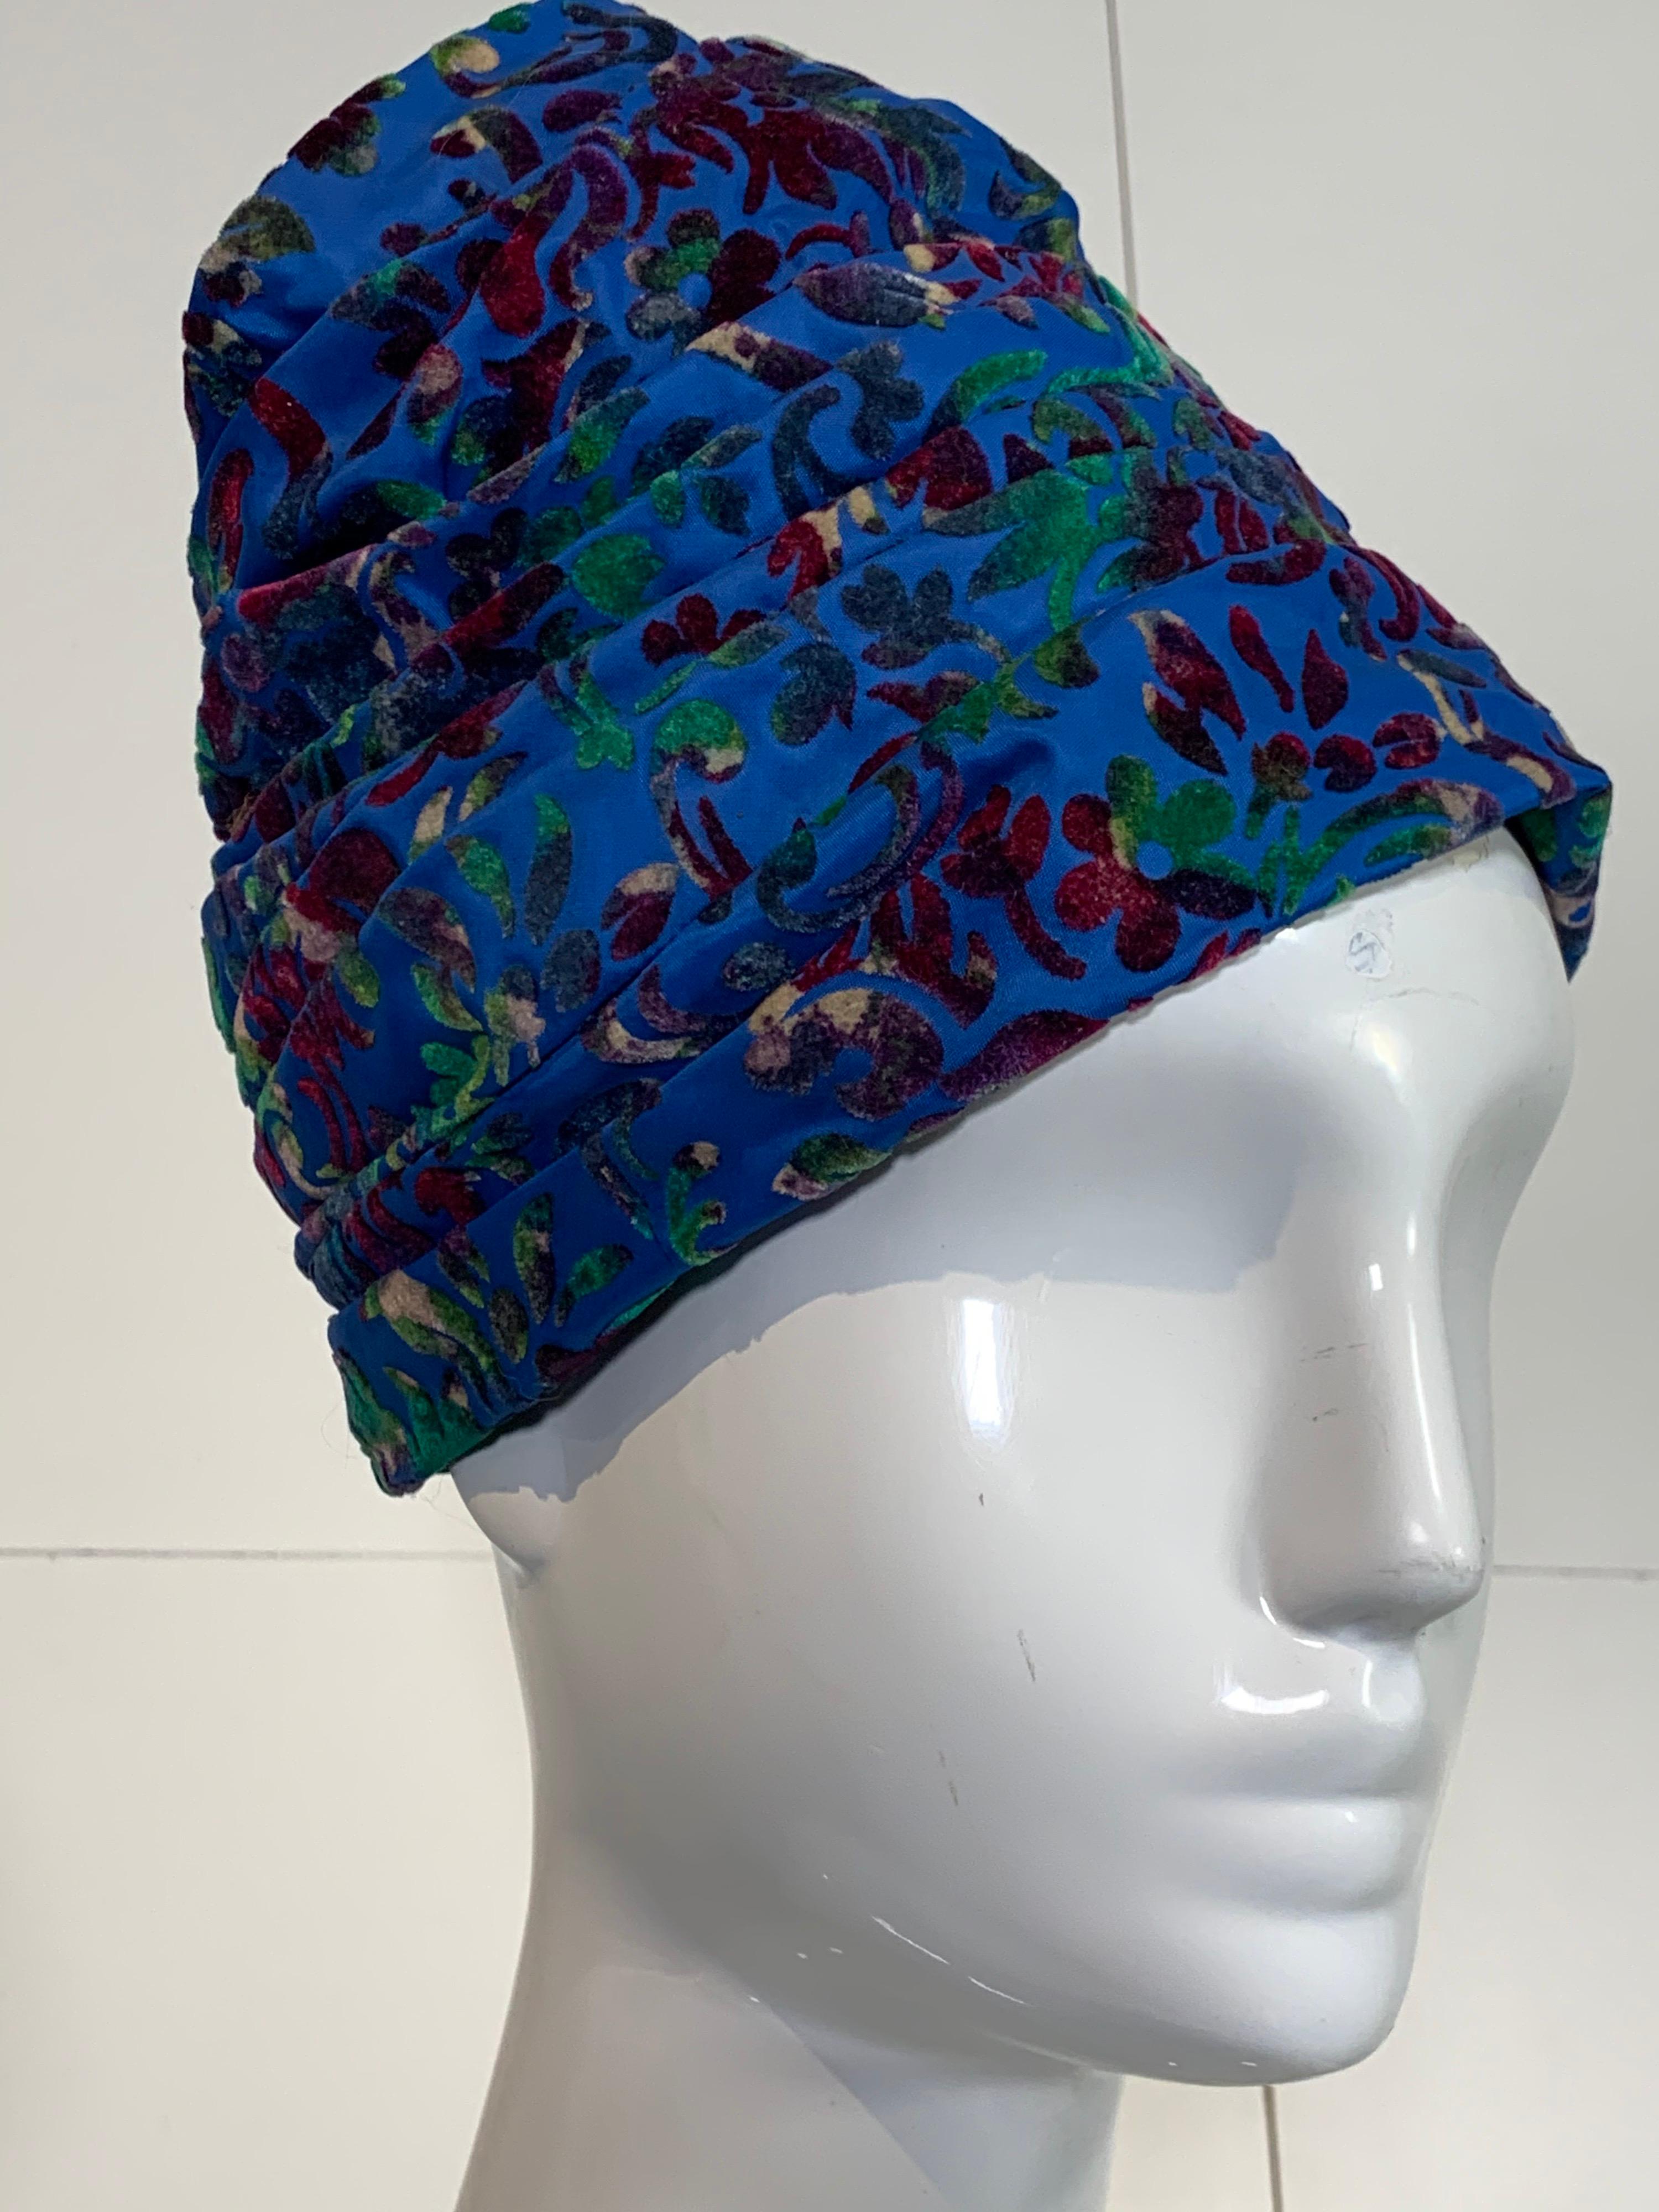 A beautiful 1960s Mr. John Jr. turban hat in a pleated cobalt blue base with figured multicolor velvet. Size medium.